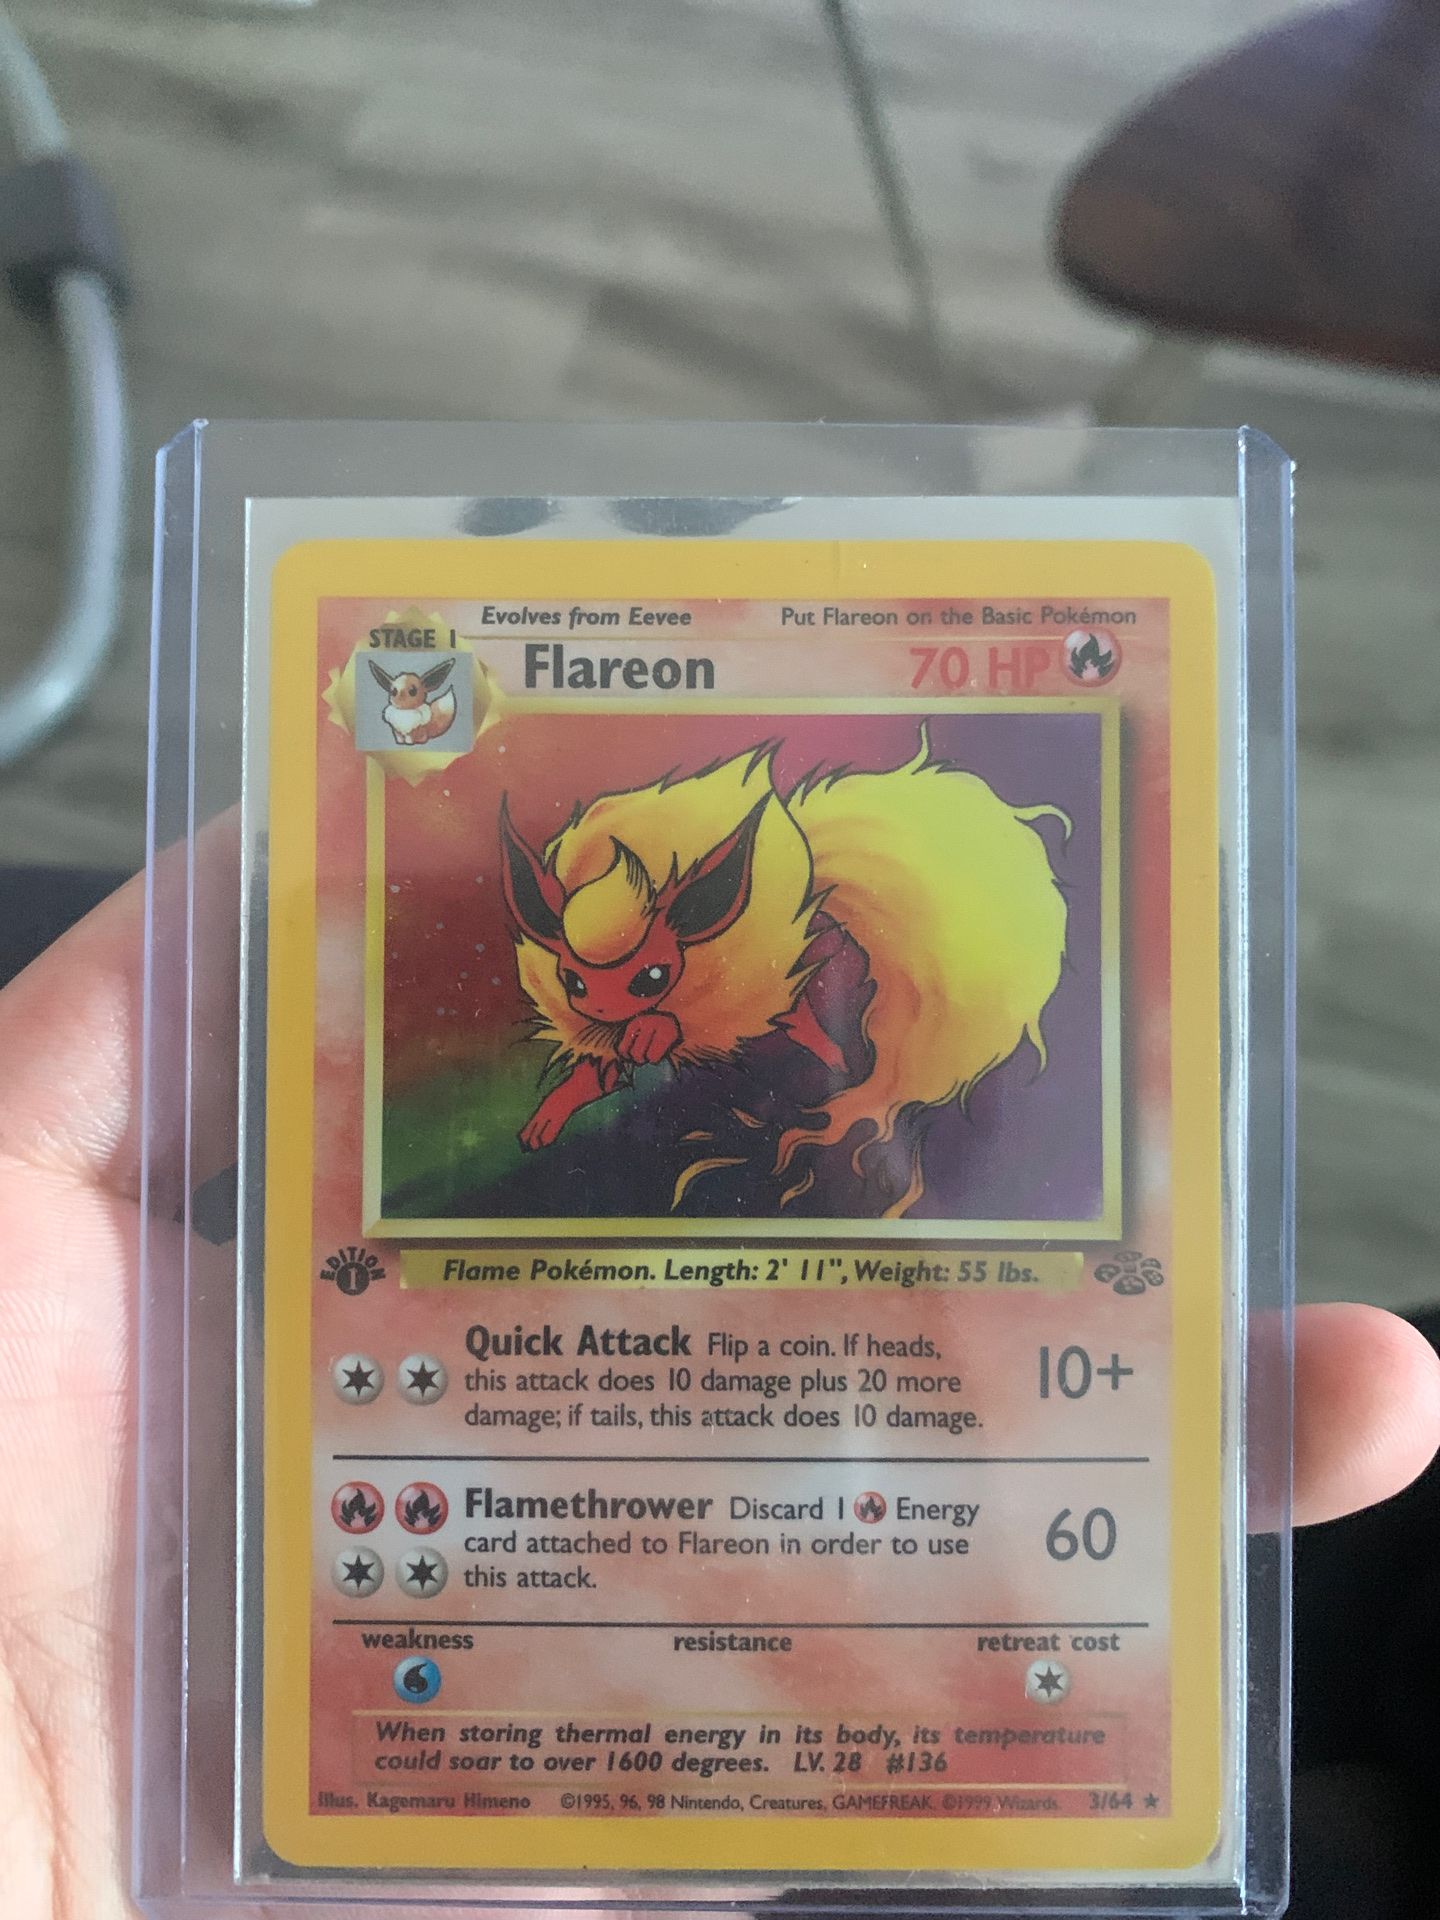 1st edition Pokémon cards